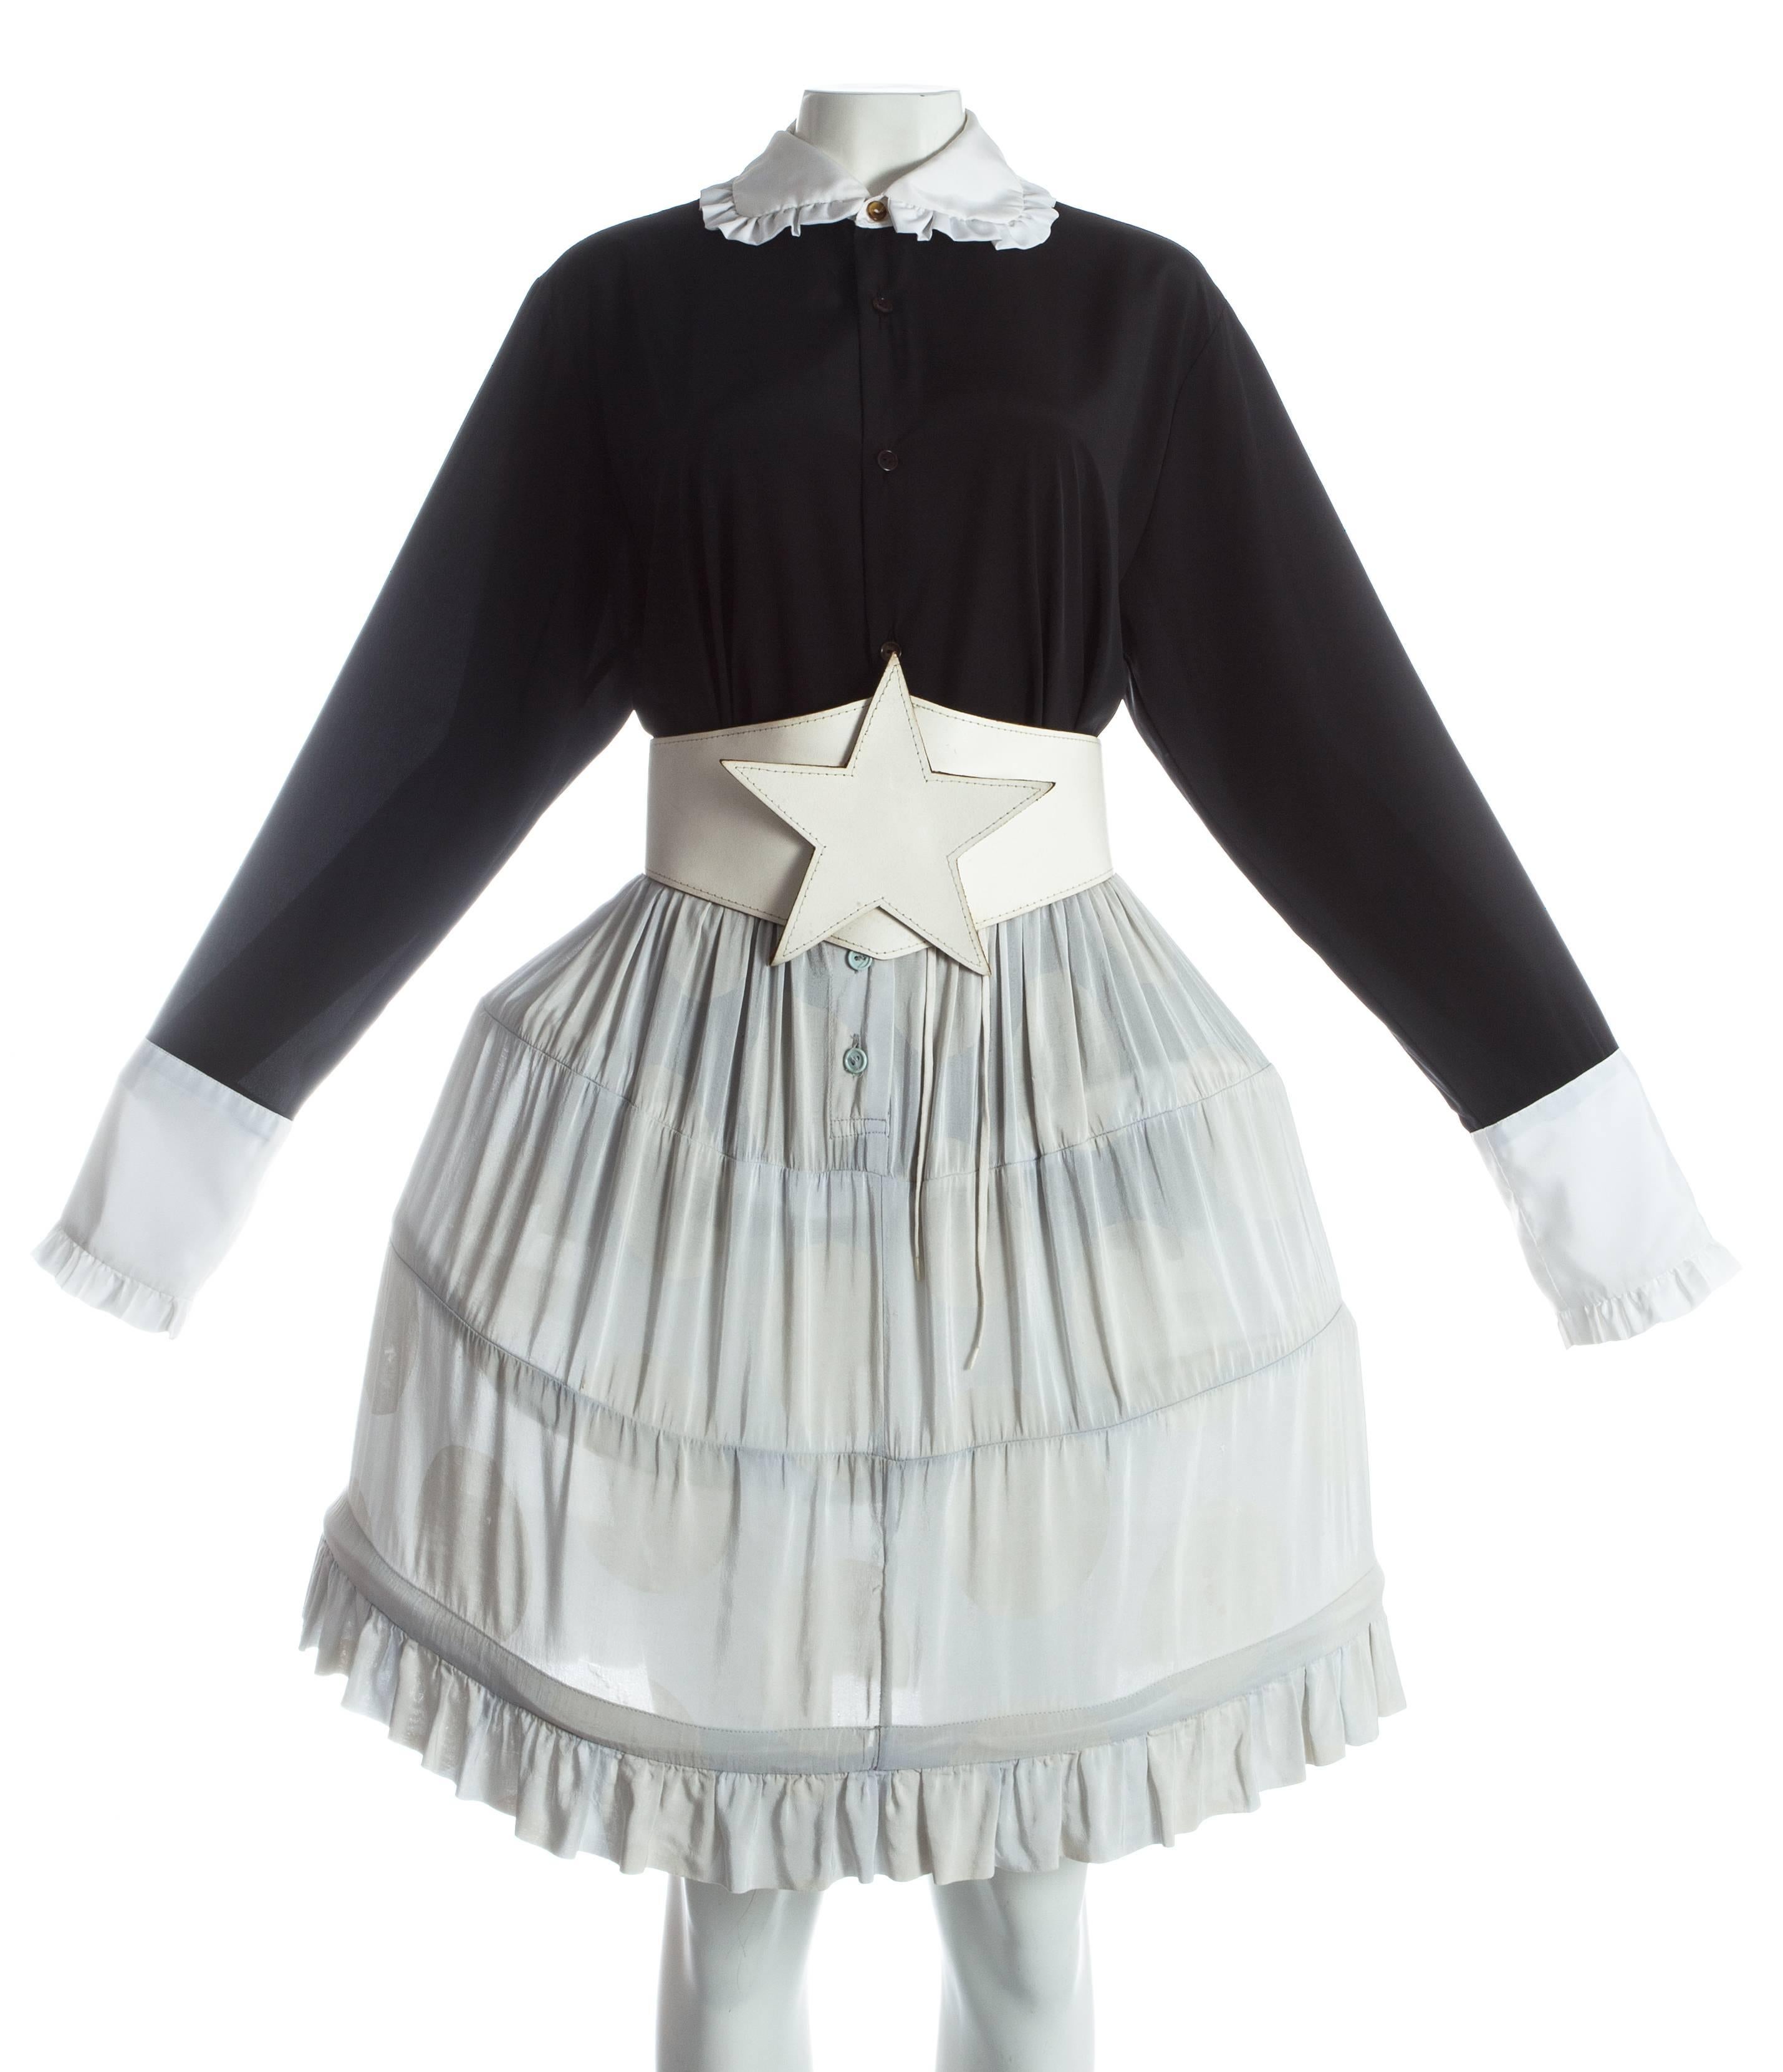 - polka dot print mini-crini skirt with ruffled hem 
- white leather star belt 
- black blouse with white ruffled collar and cuffs 

Spring-Summer 1985 